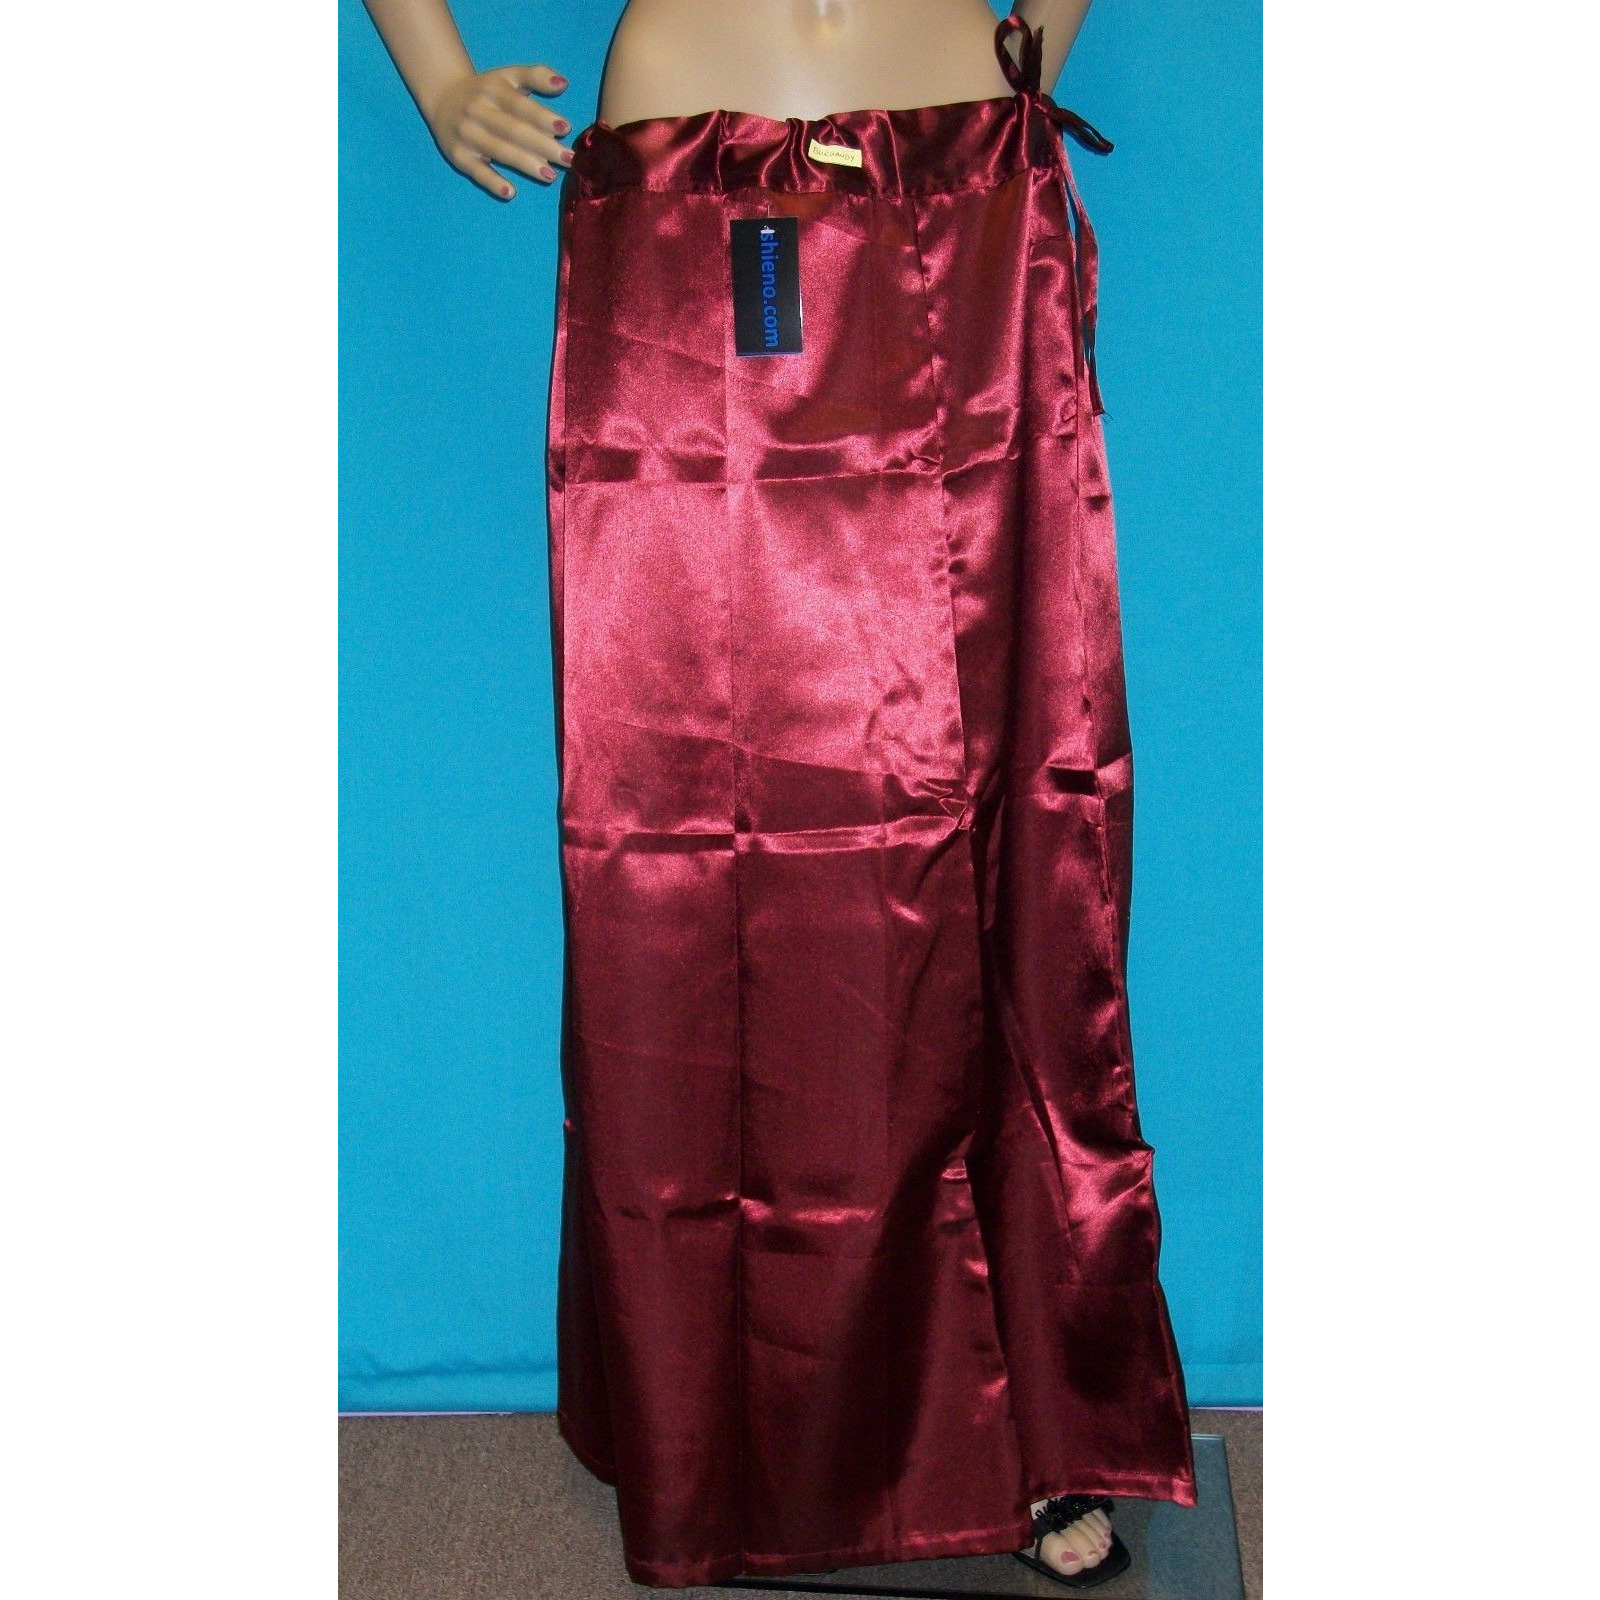 Buy Online Petticoat 508 Satin Underskirt Inskirt Saree Petticoat